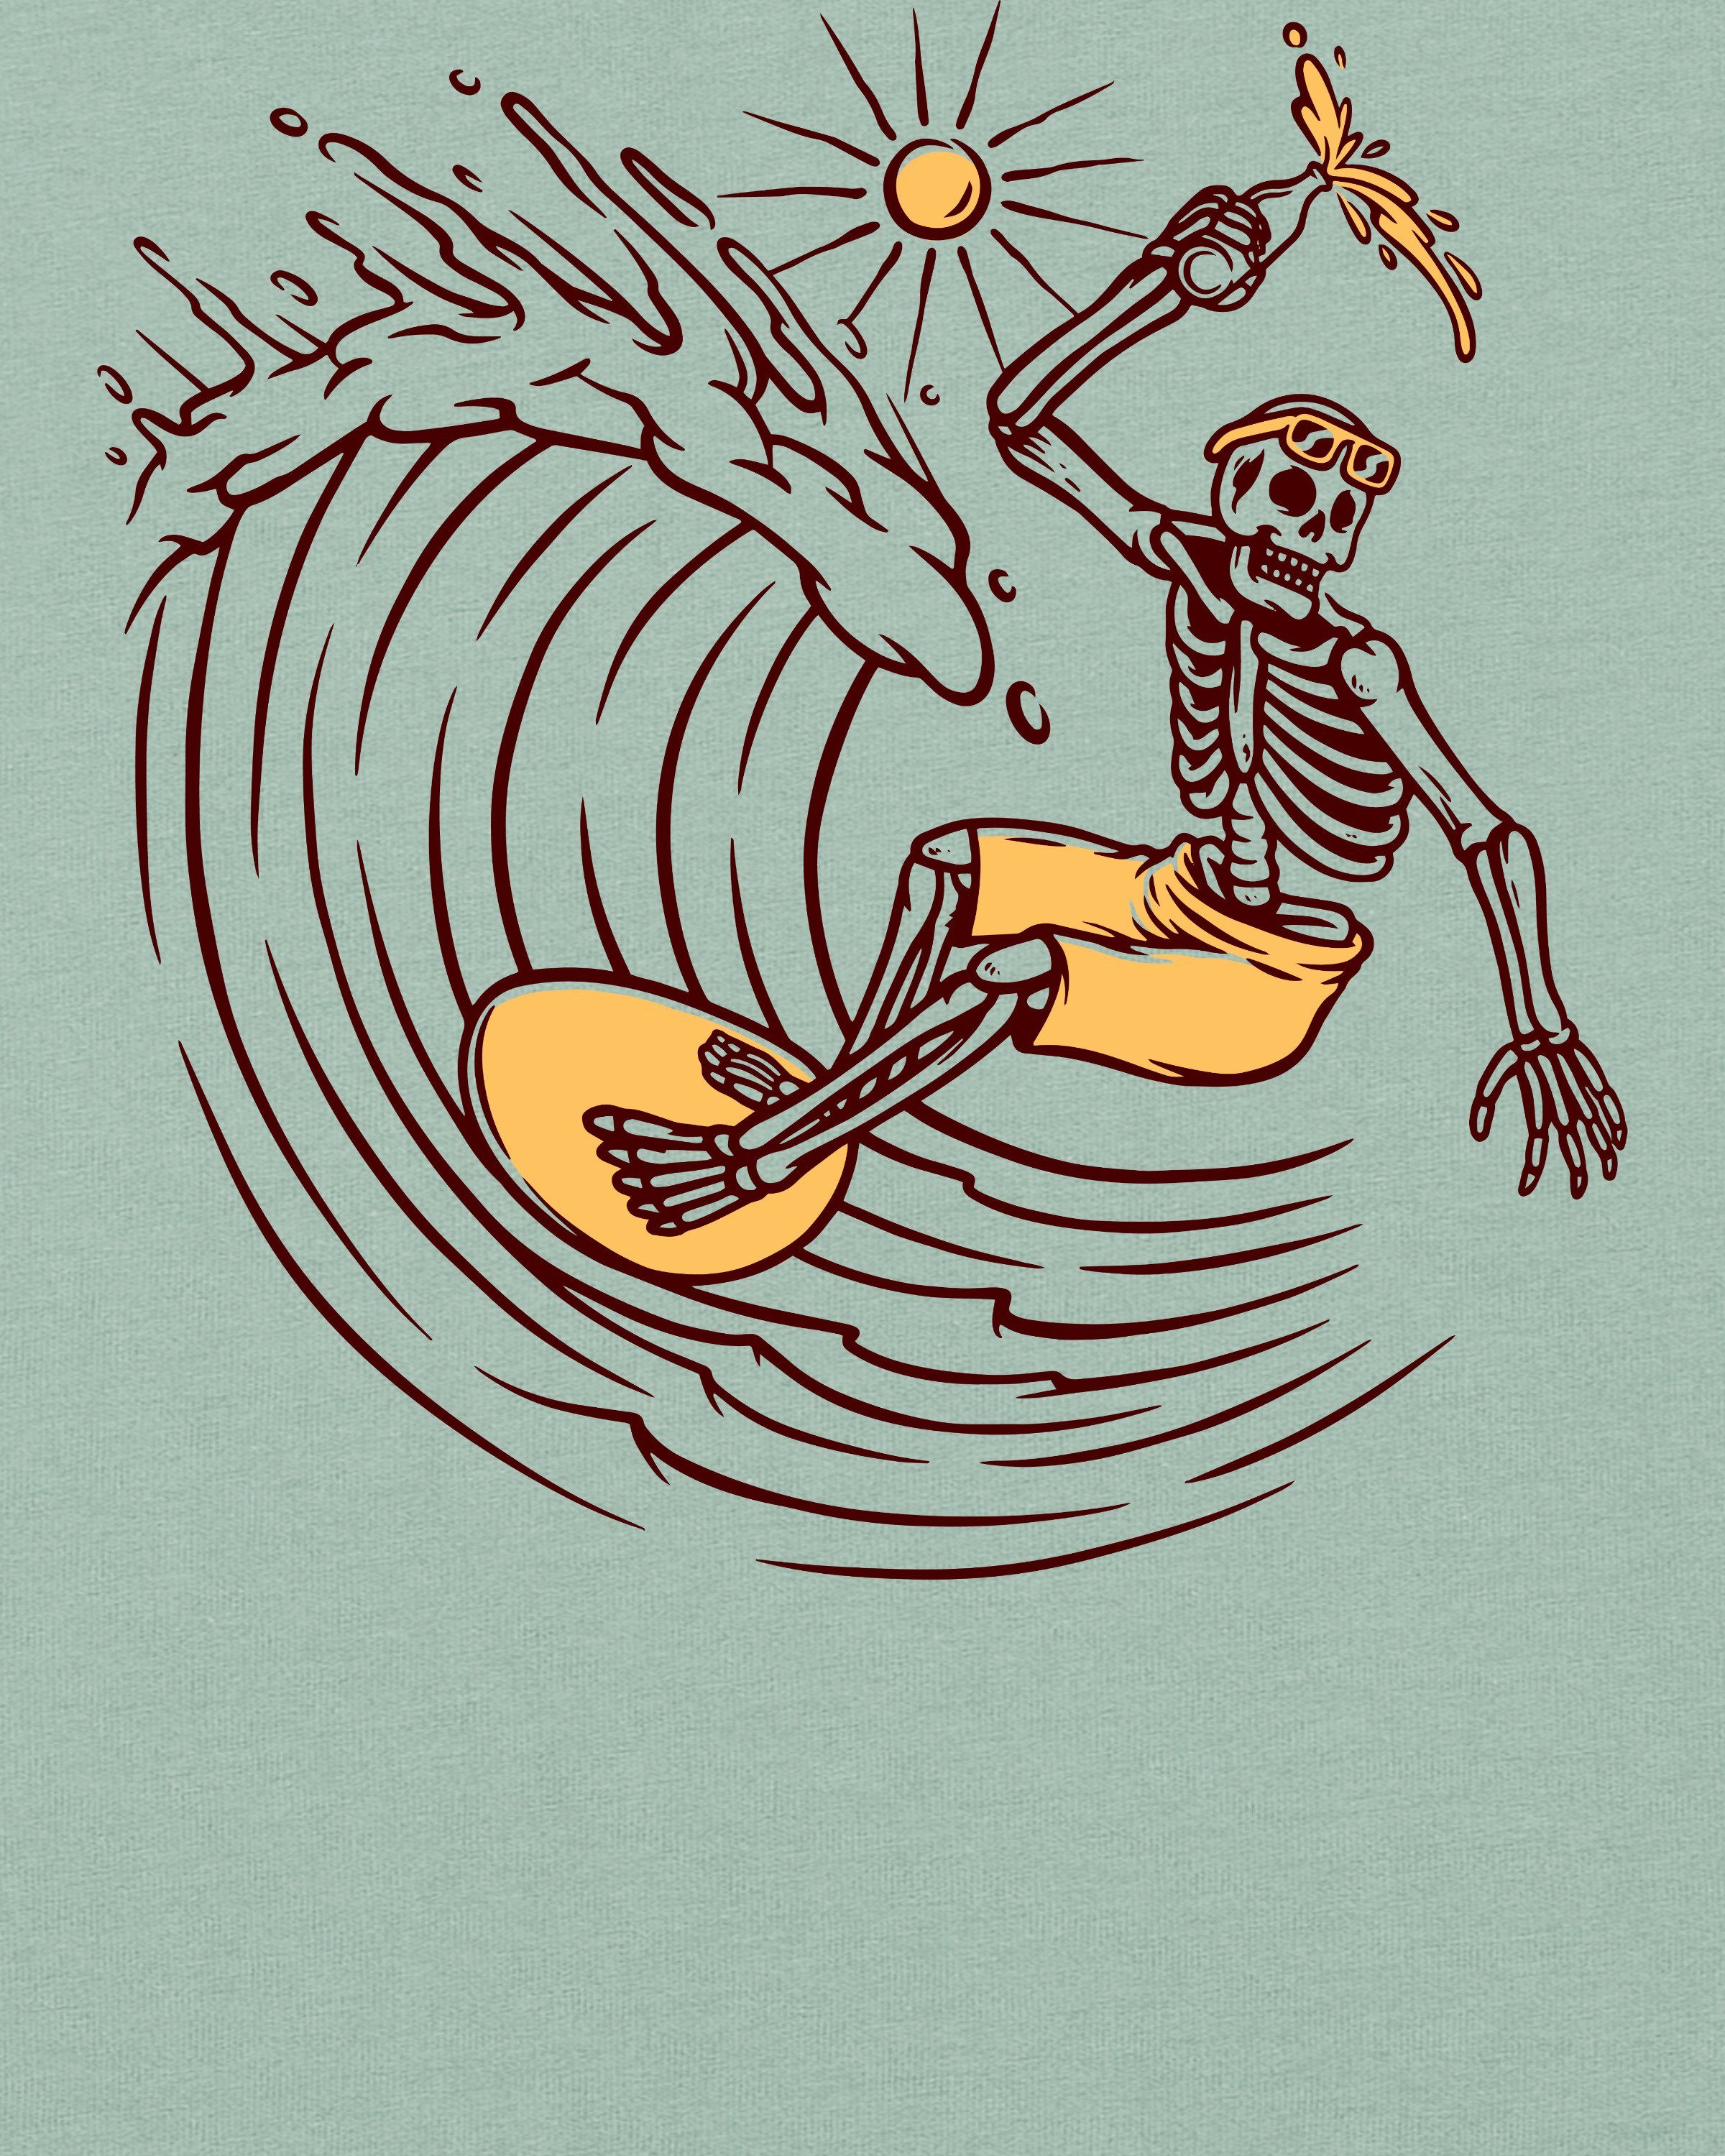 wat? Apparel Print-Shirt Surfing (1-tlg) life Aloe for